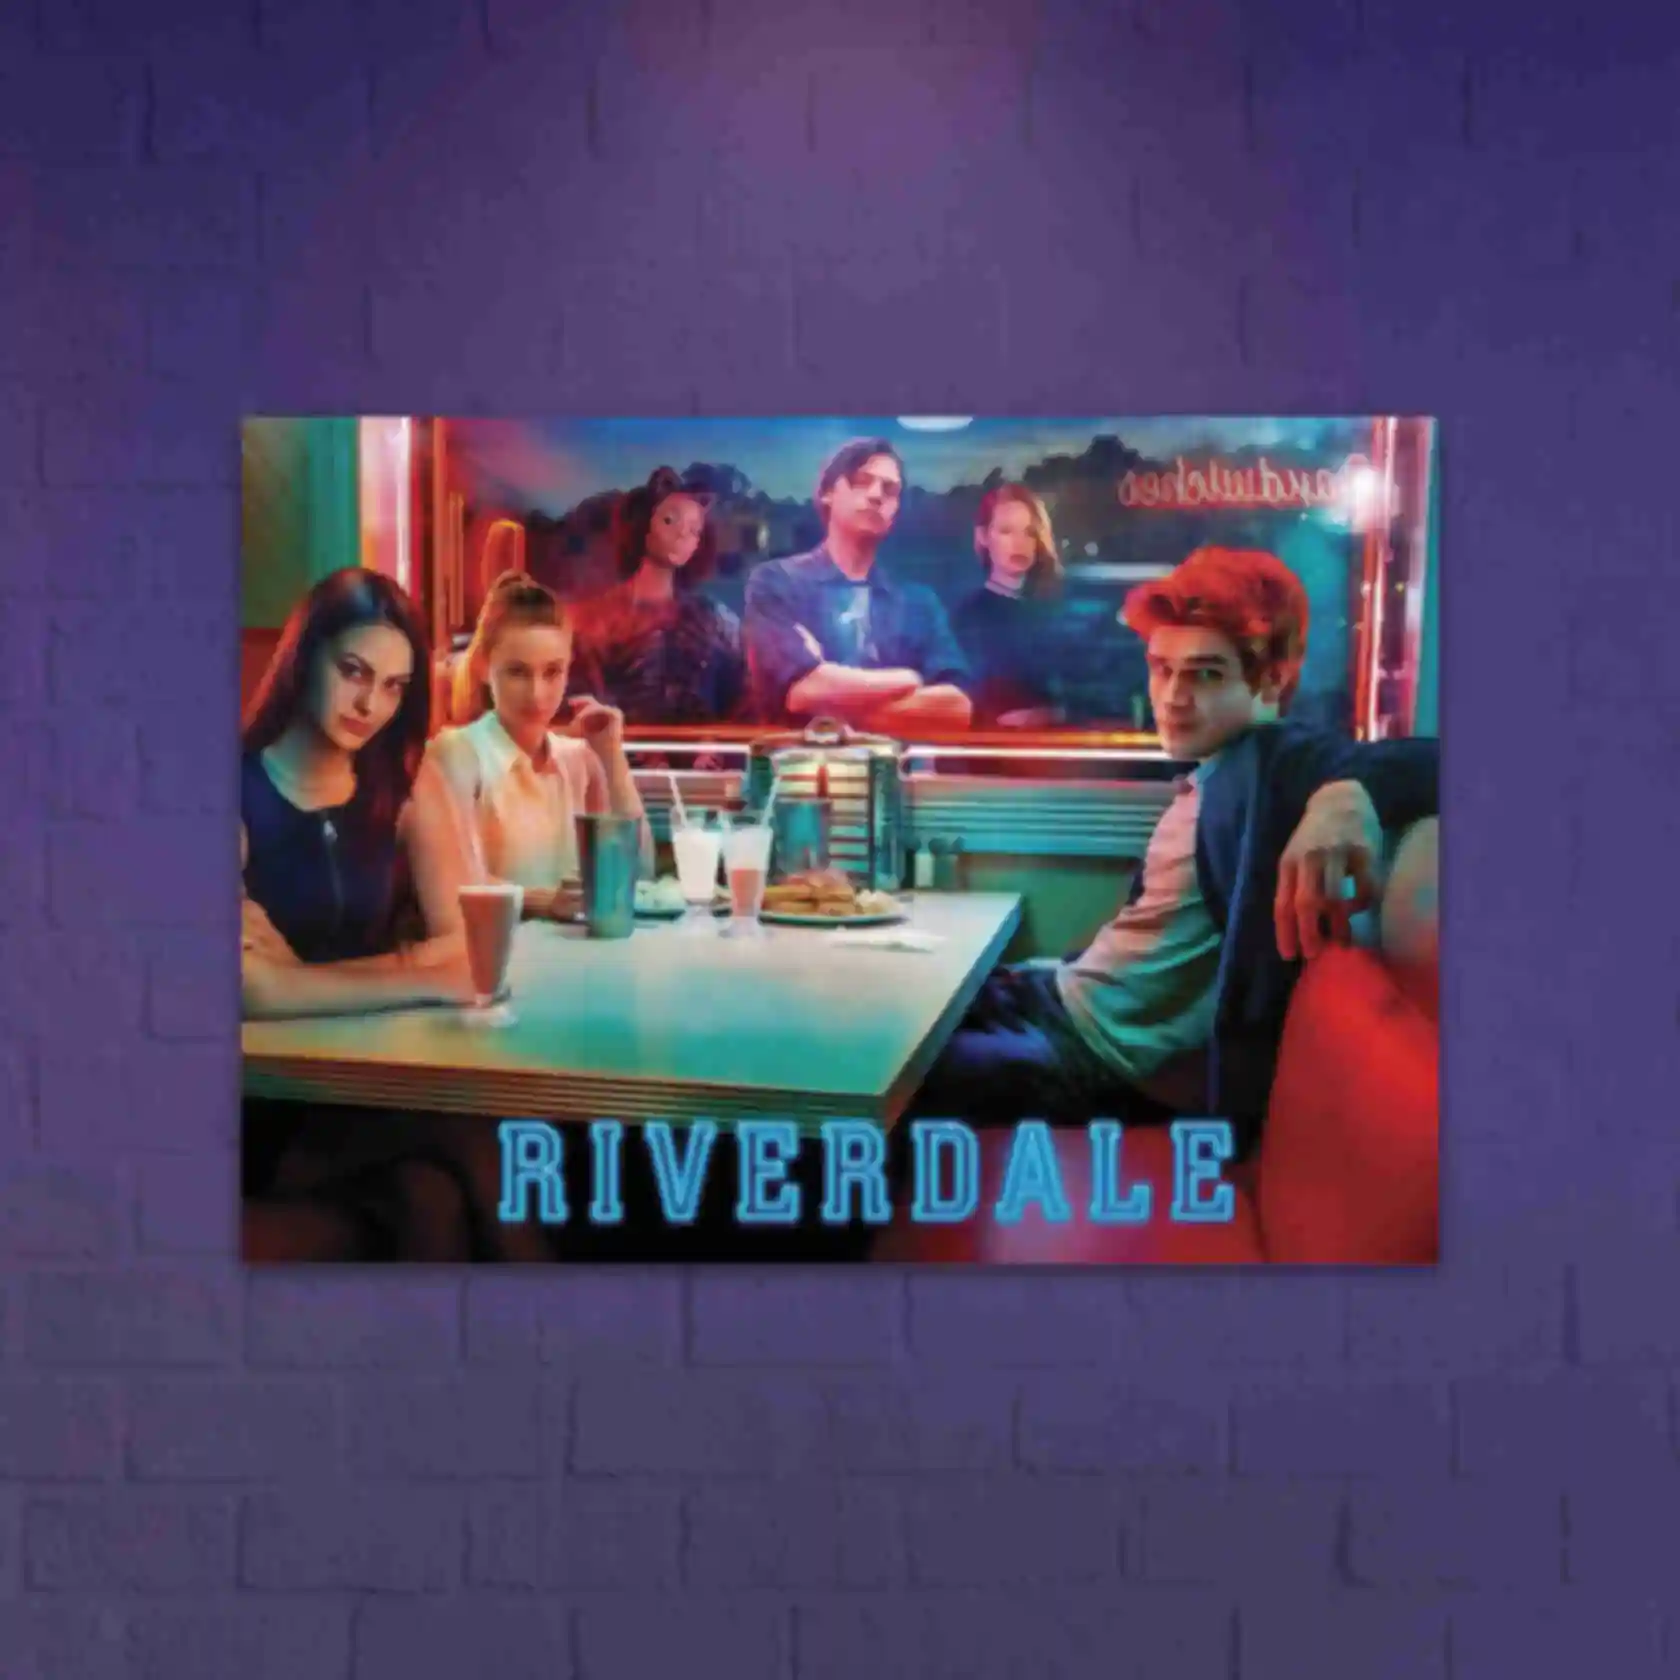 Постер • Ривердейл • Плакат с героями • Сувениры • Подарки в стиле сериала Riverdale